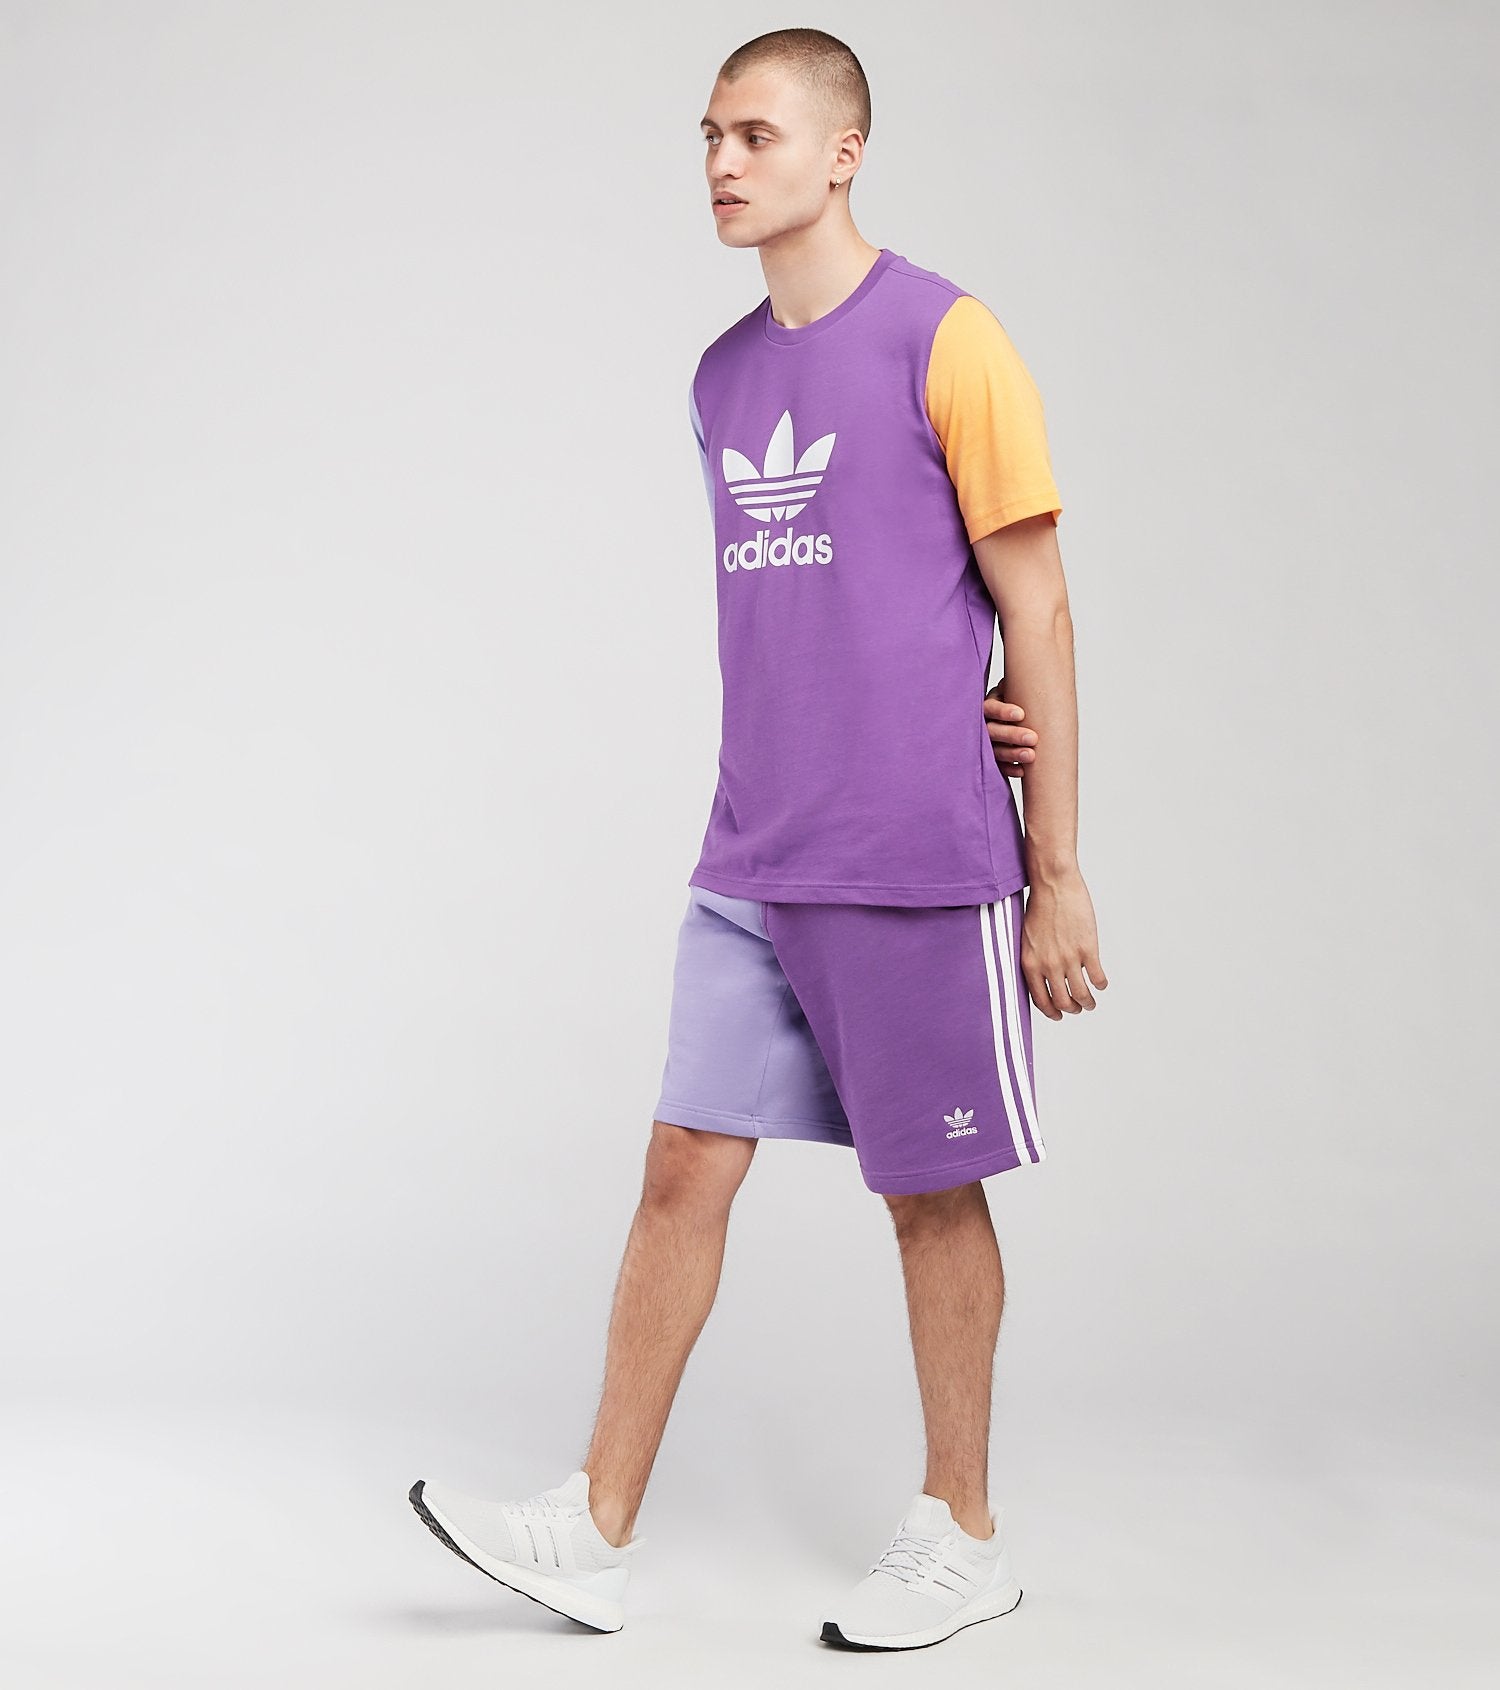 Adidas Men's T-Shirt - Purple - M